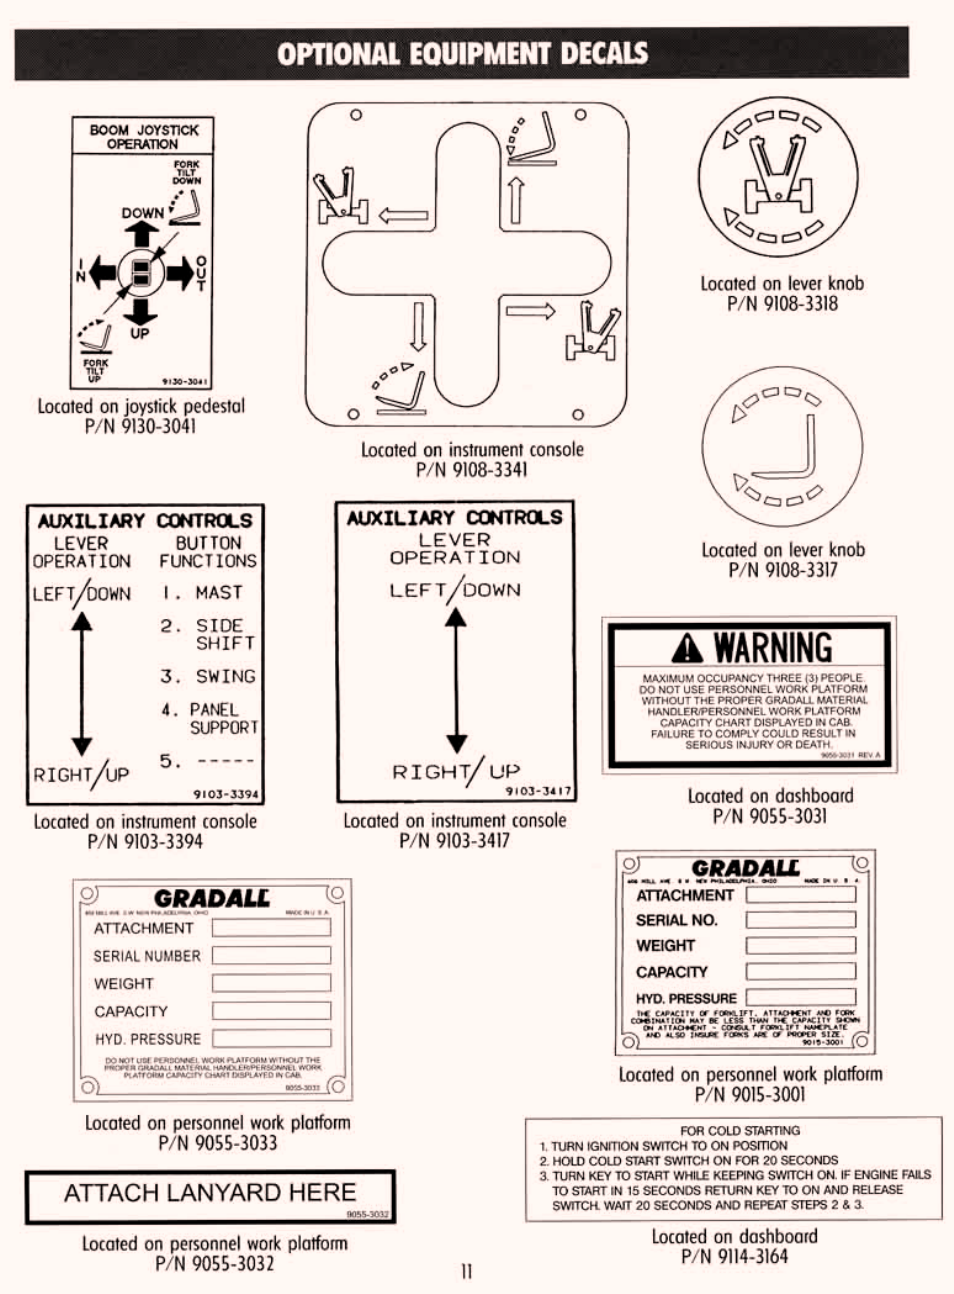 Optional equipment decals | Gradall 534C-10 (9114-4437) Service Manual